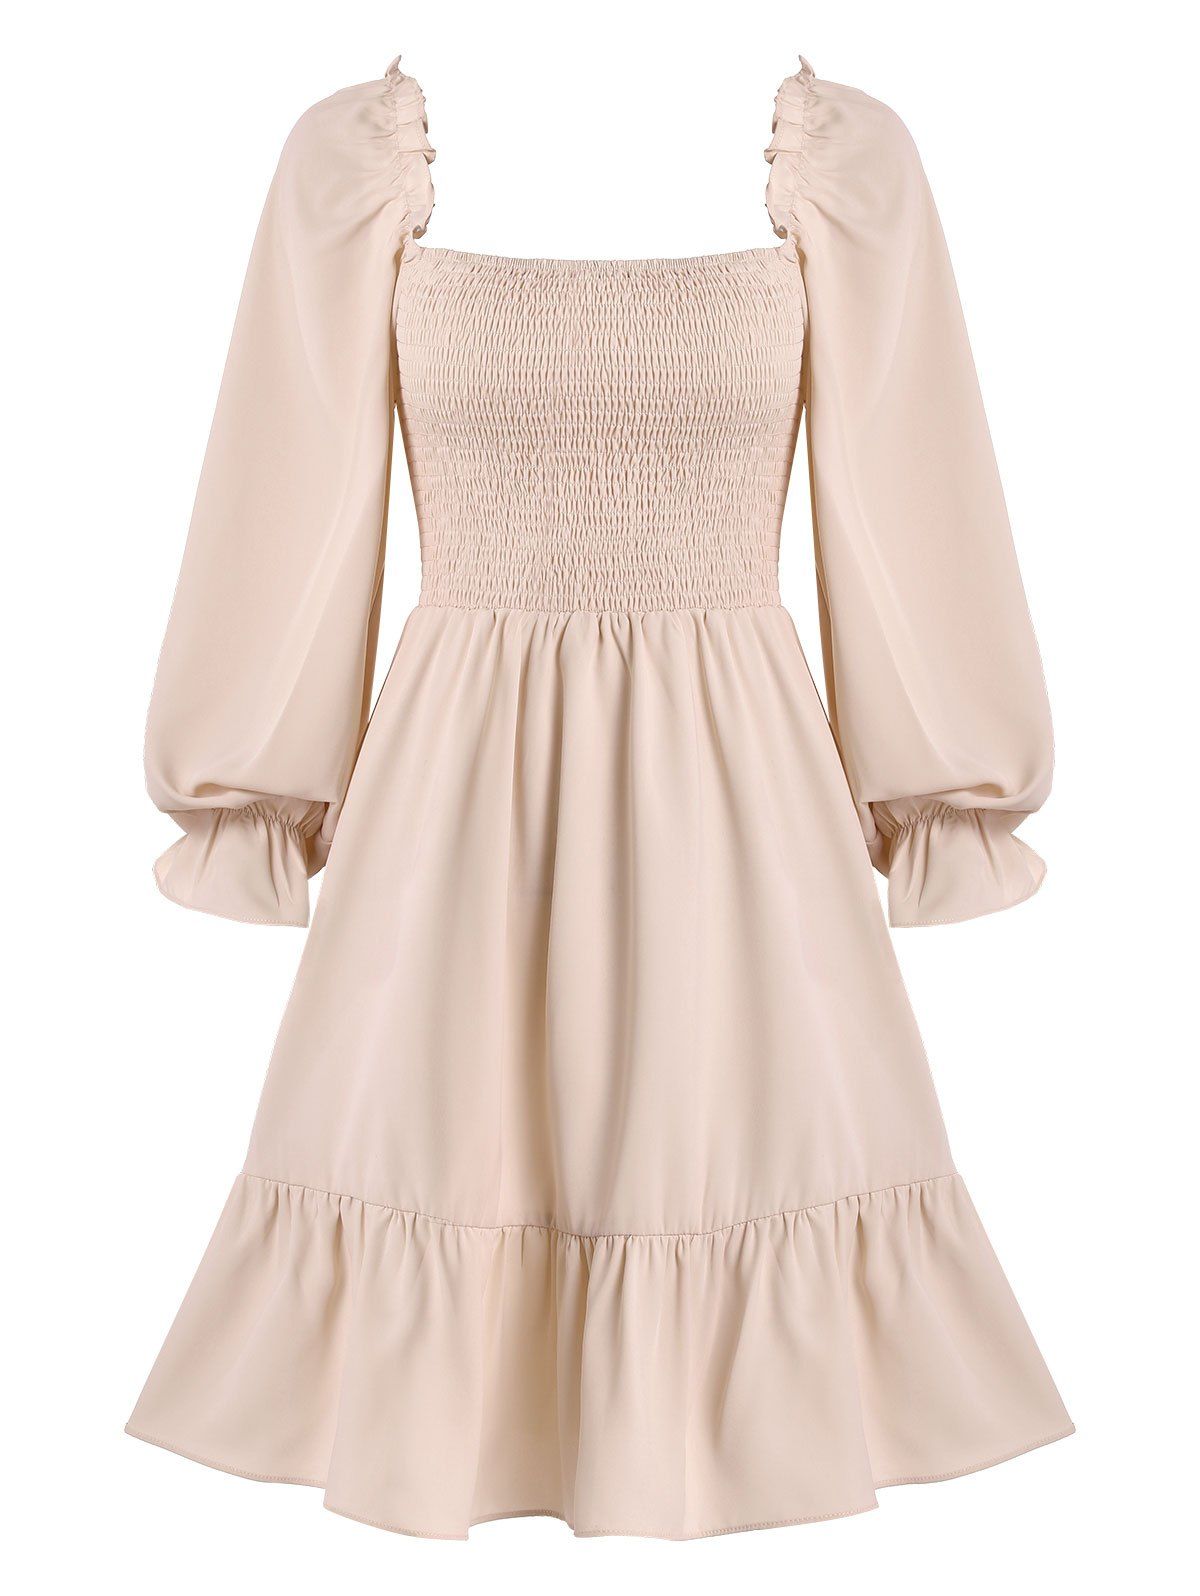 Vintage Dress Puff Sleeve Ruffled Cuff Smocked Flounce Mini Dress Pure Color Square Neck A Line Dress - LIGHT COFFEE XL